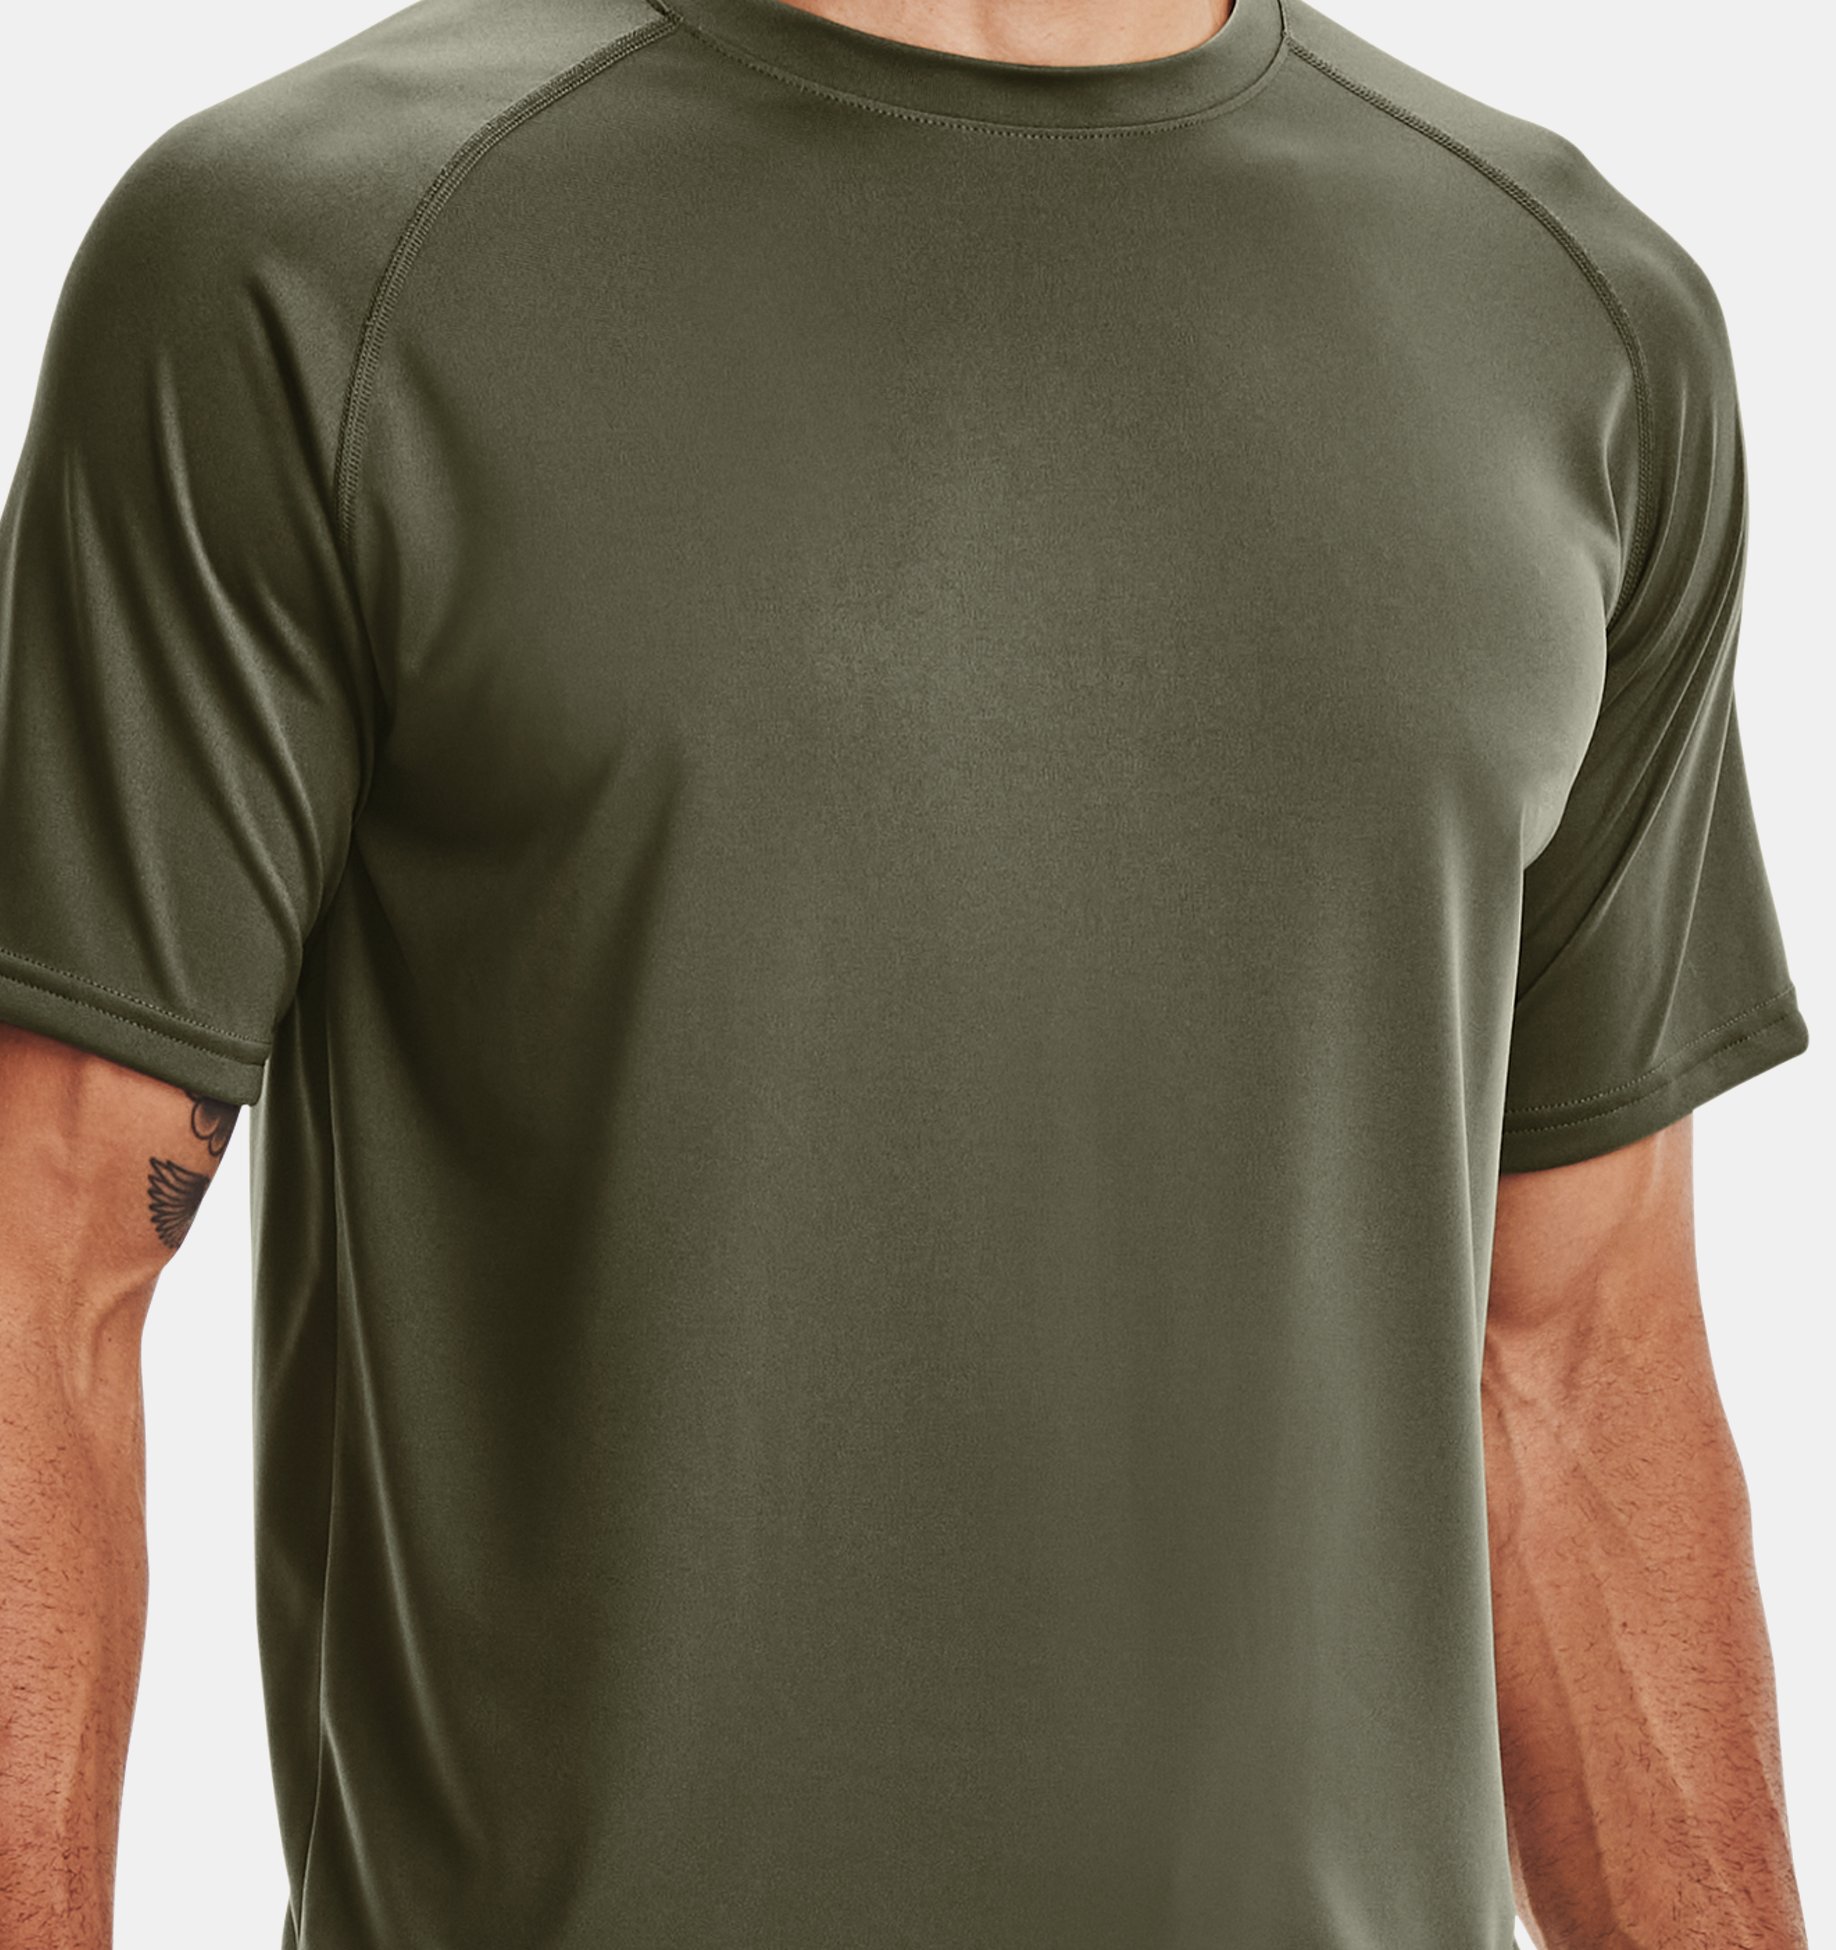 Stockschlag – dein Unihockey Shop – Under Armour Tech Vent T-Shirt kurzarm